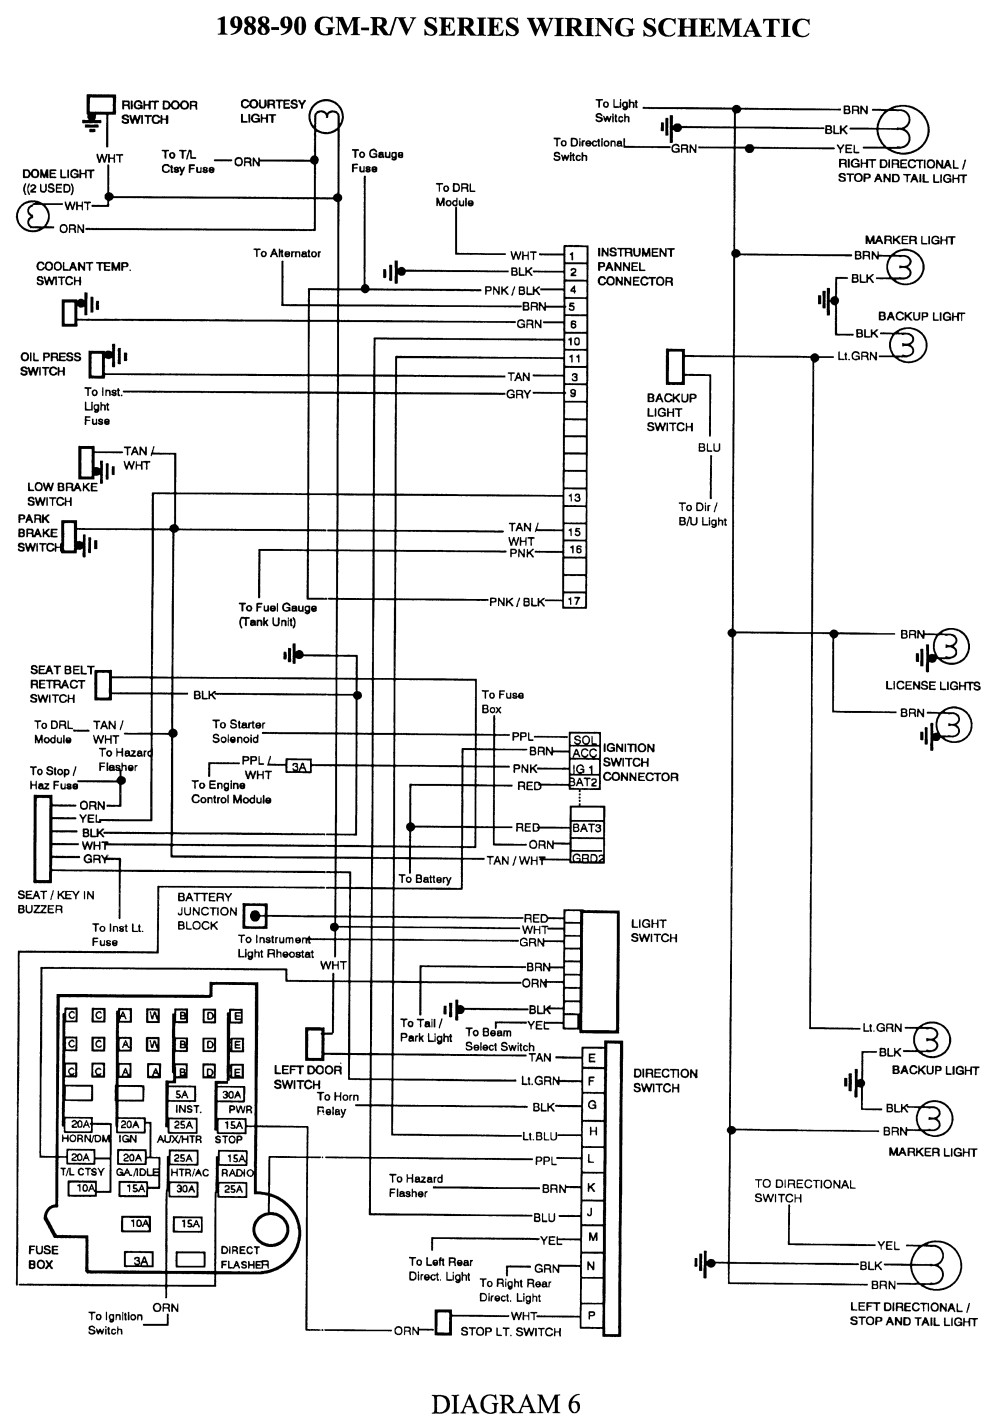 1989 Chevy 3500 Heater Wiring Diagram Wiring Diagram 1990 Civic Wiring Diagram 1990 Chevrolet Suburban Blower Motor Wiring Diagram